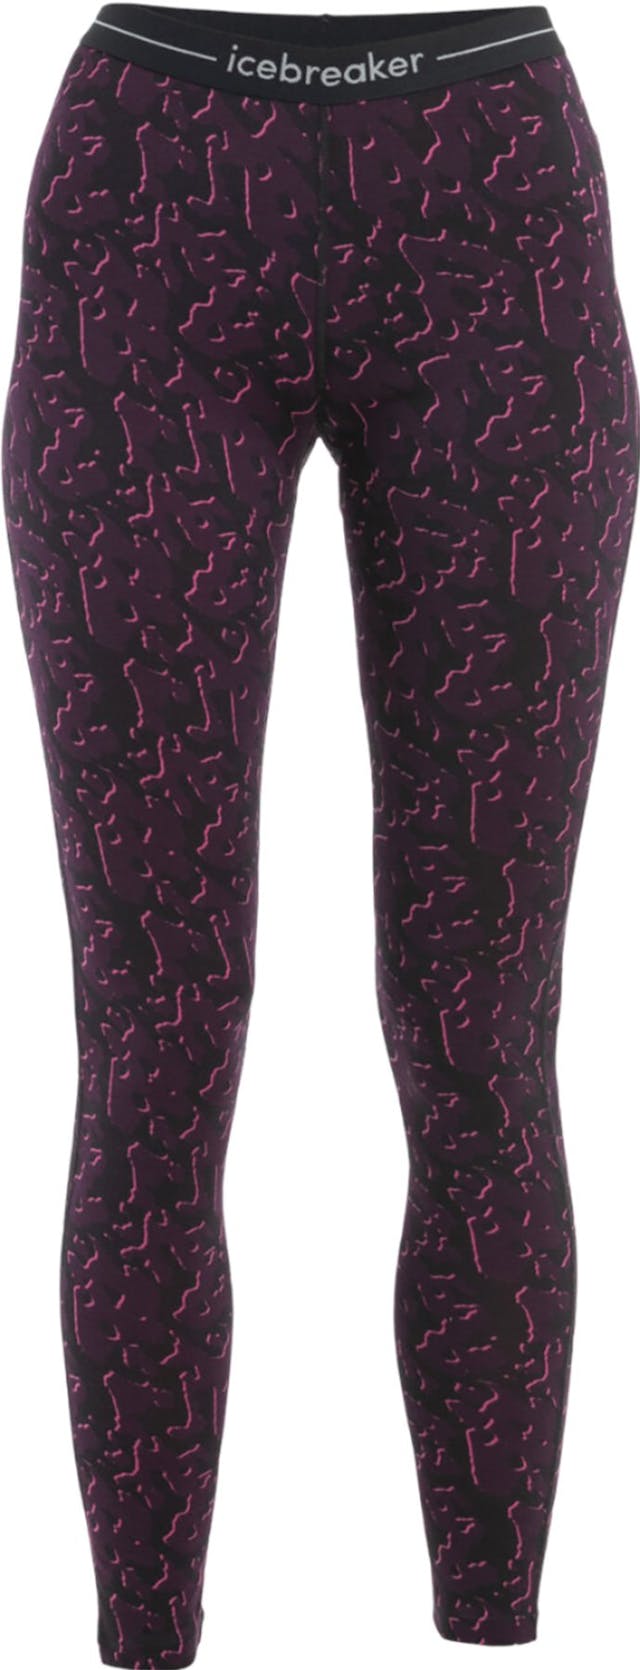 Product image for 200 Oasis Macro Forms Merino Thermal Leggings - Women's